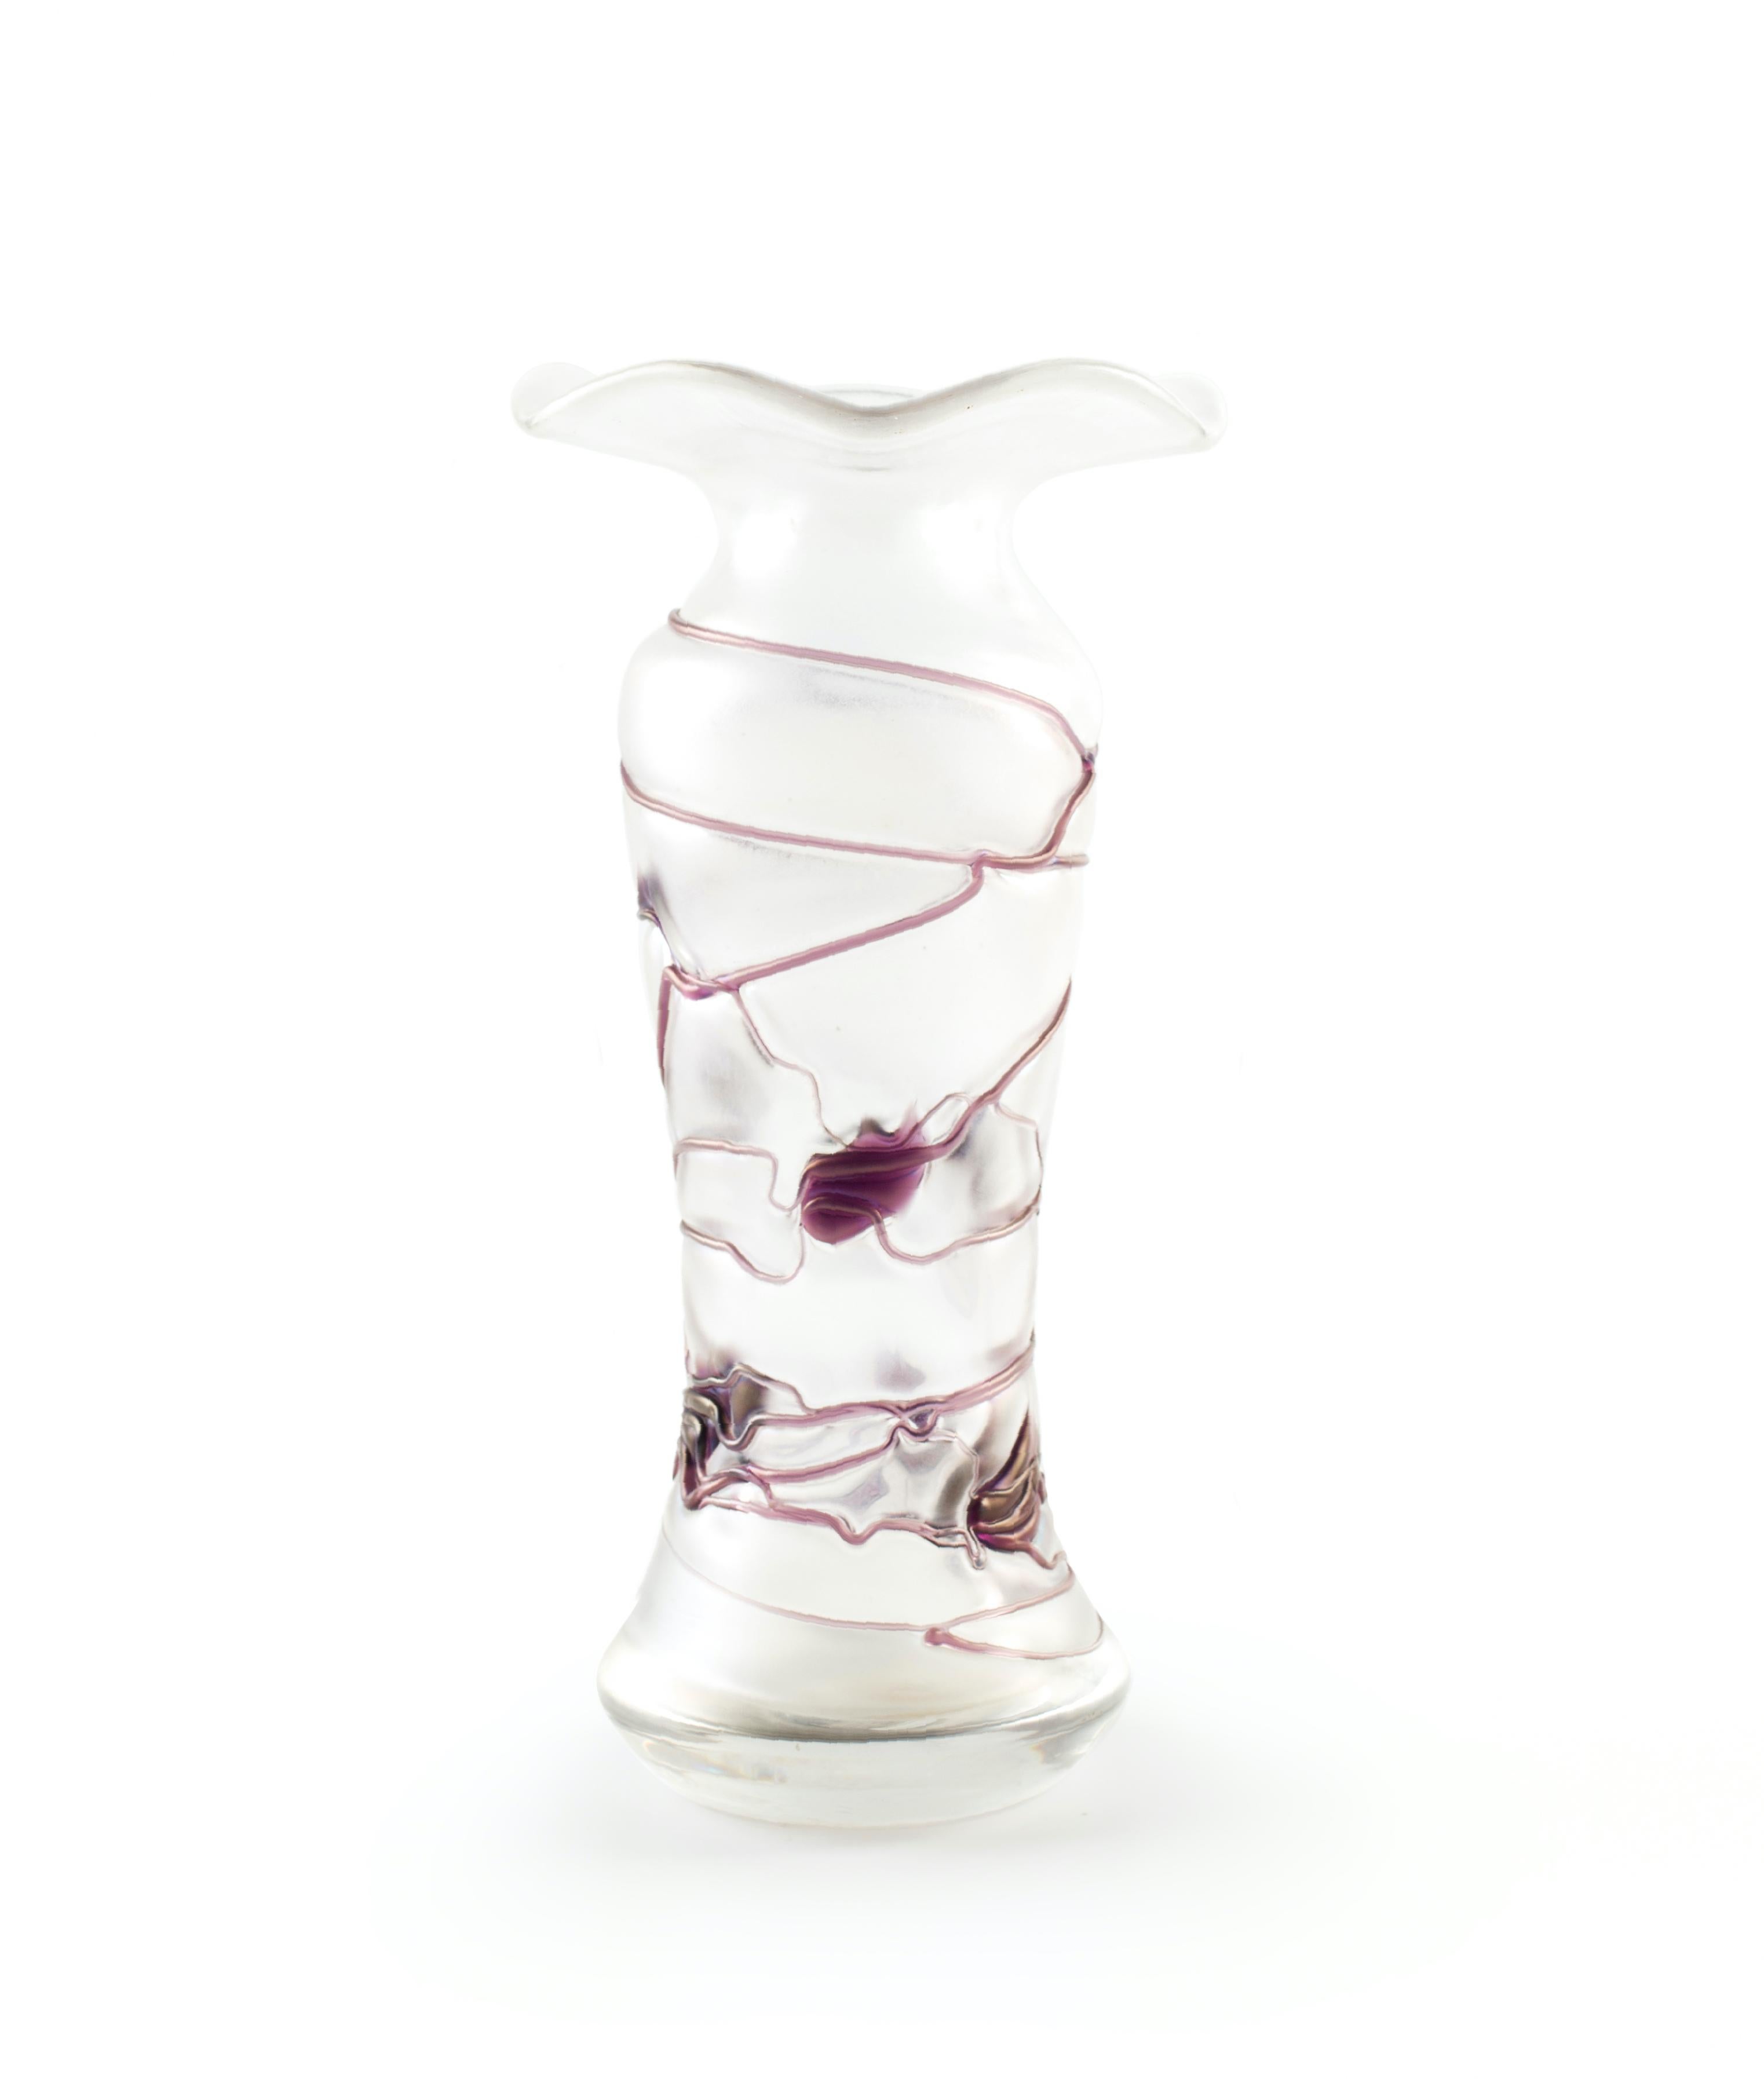 Stunning antique Poschinger Kristallie Art Nouveau satin glass bud vase